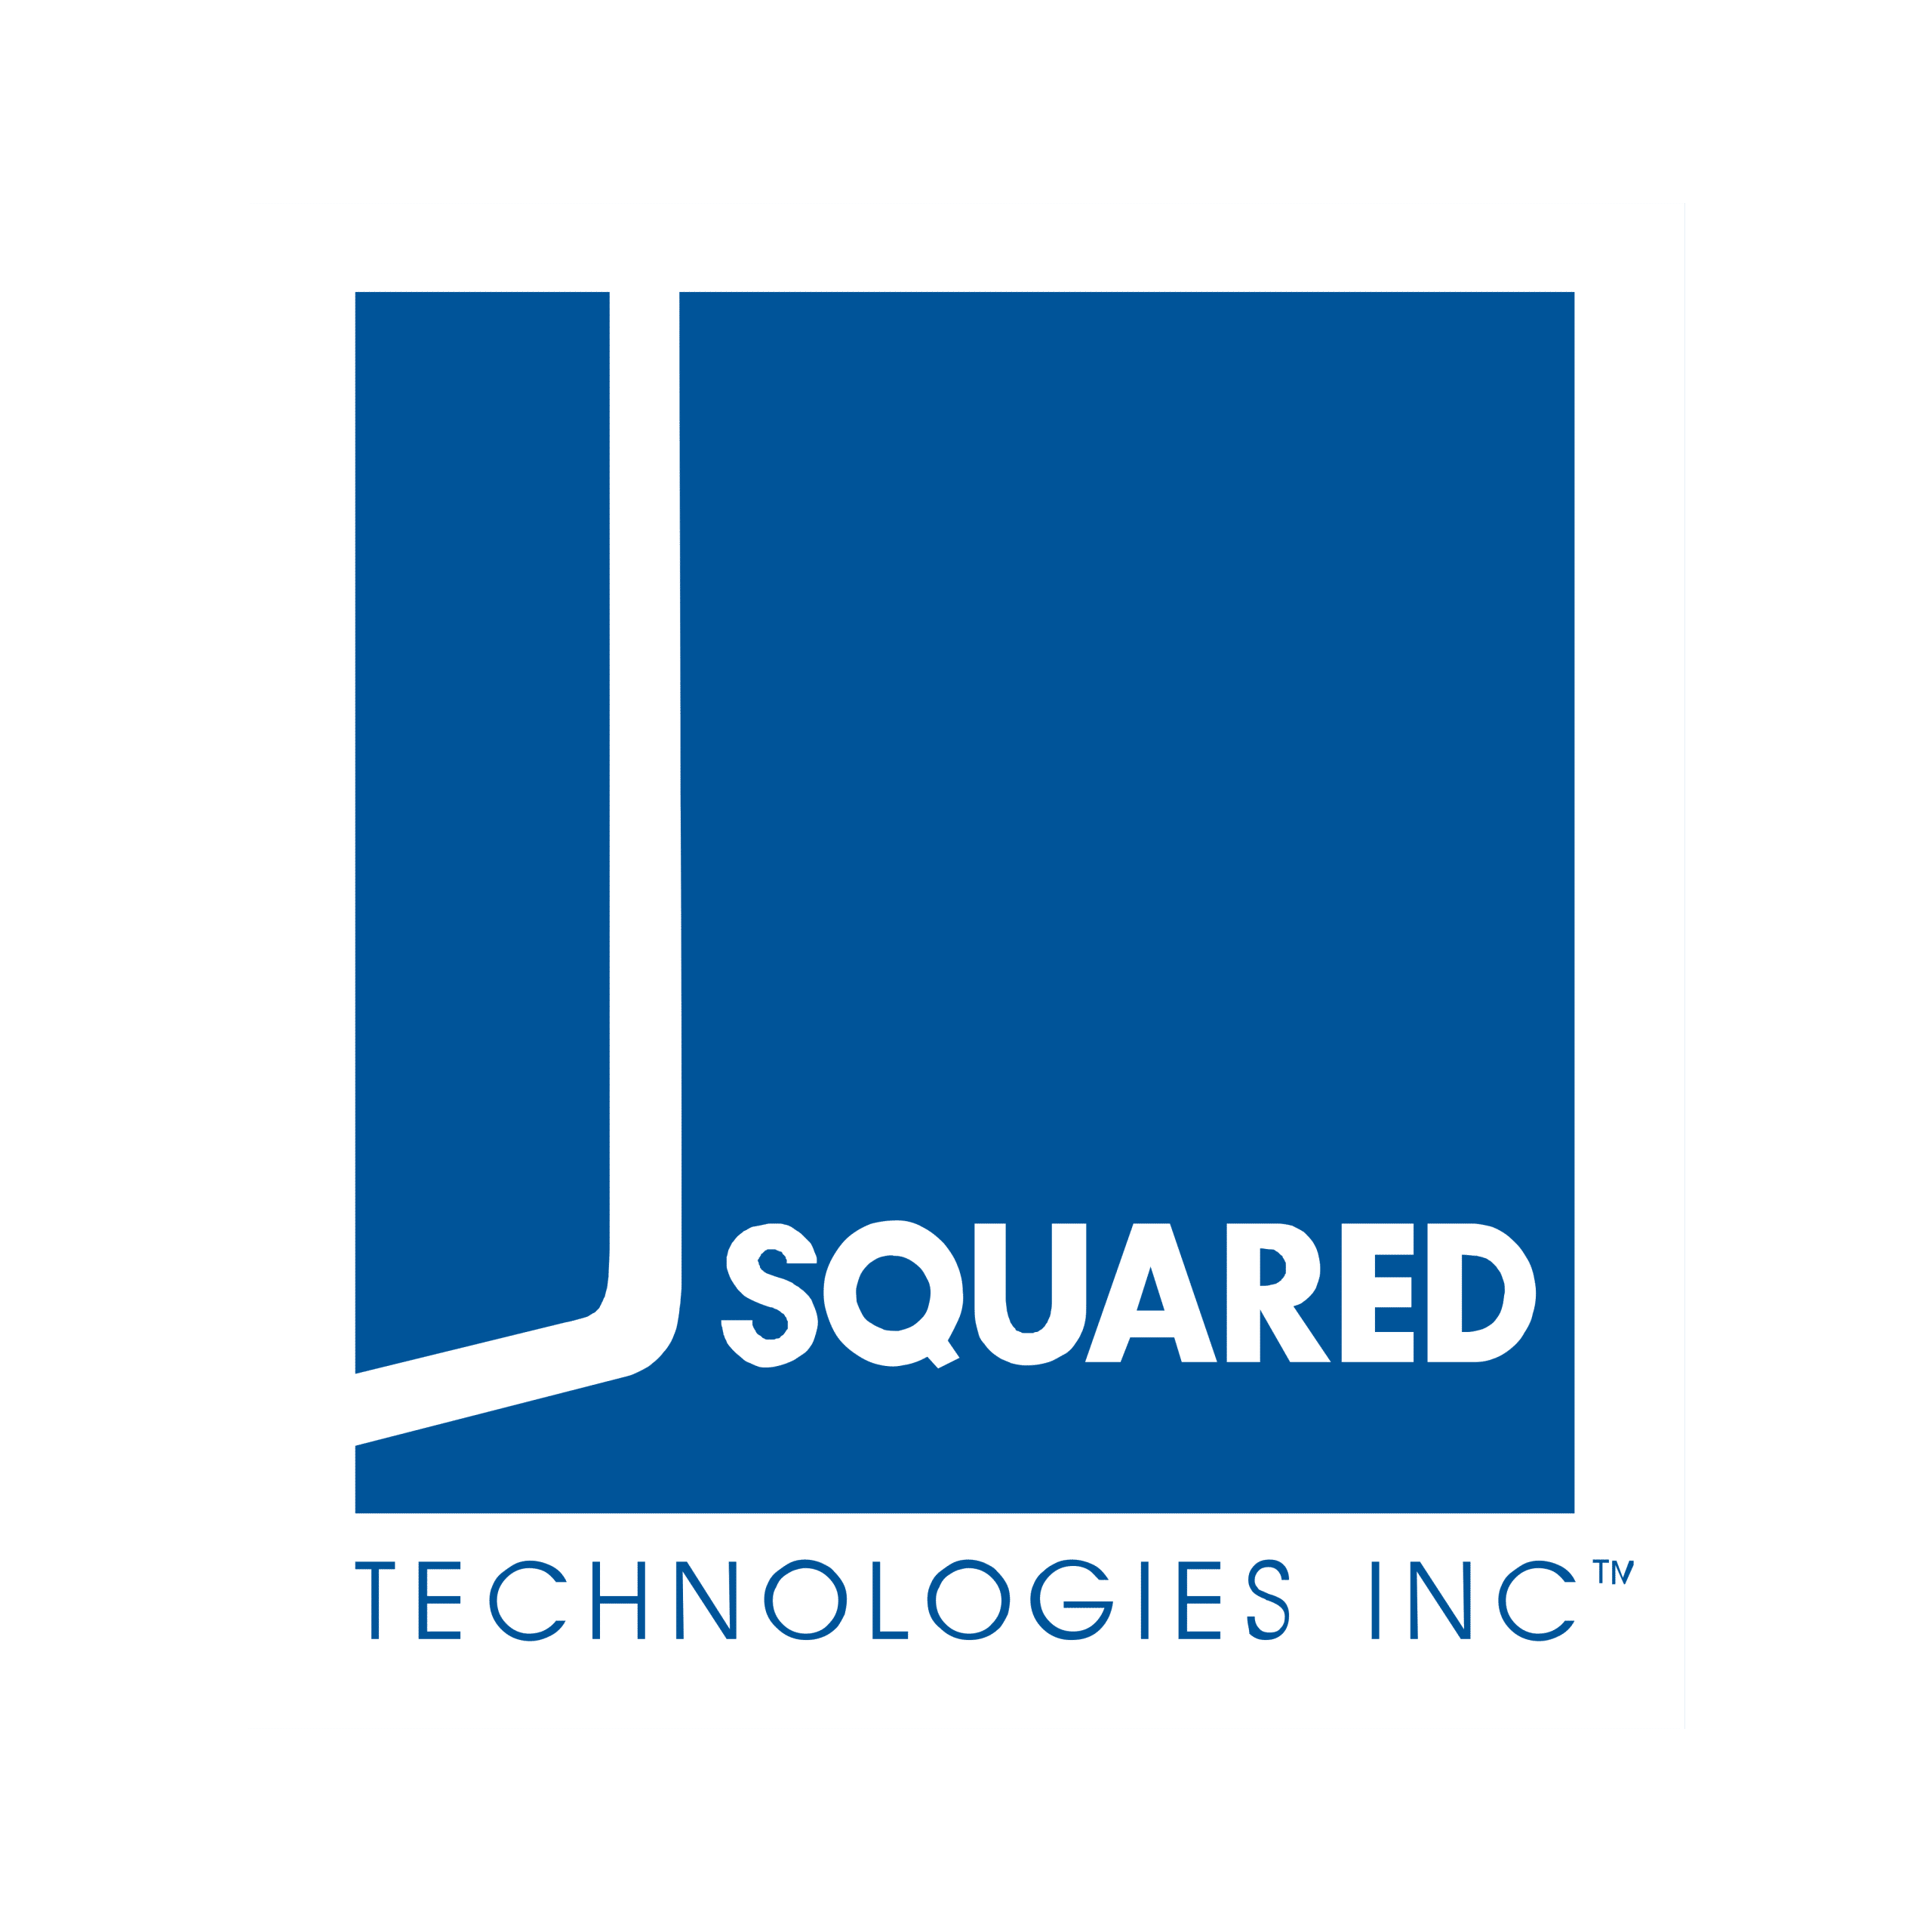 J-Squared Technologies